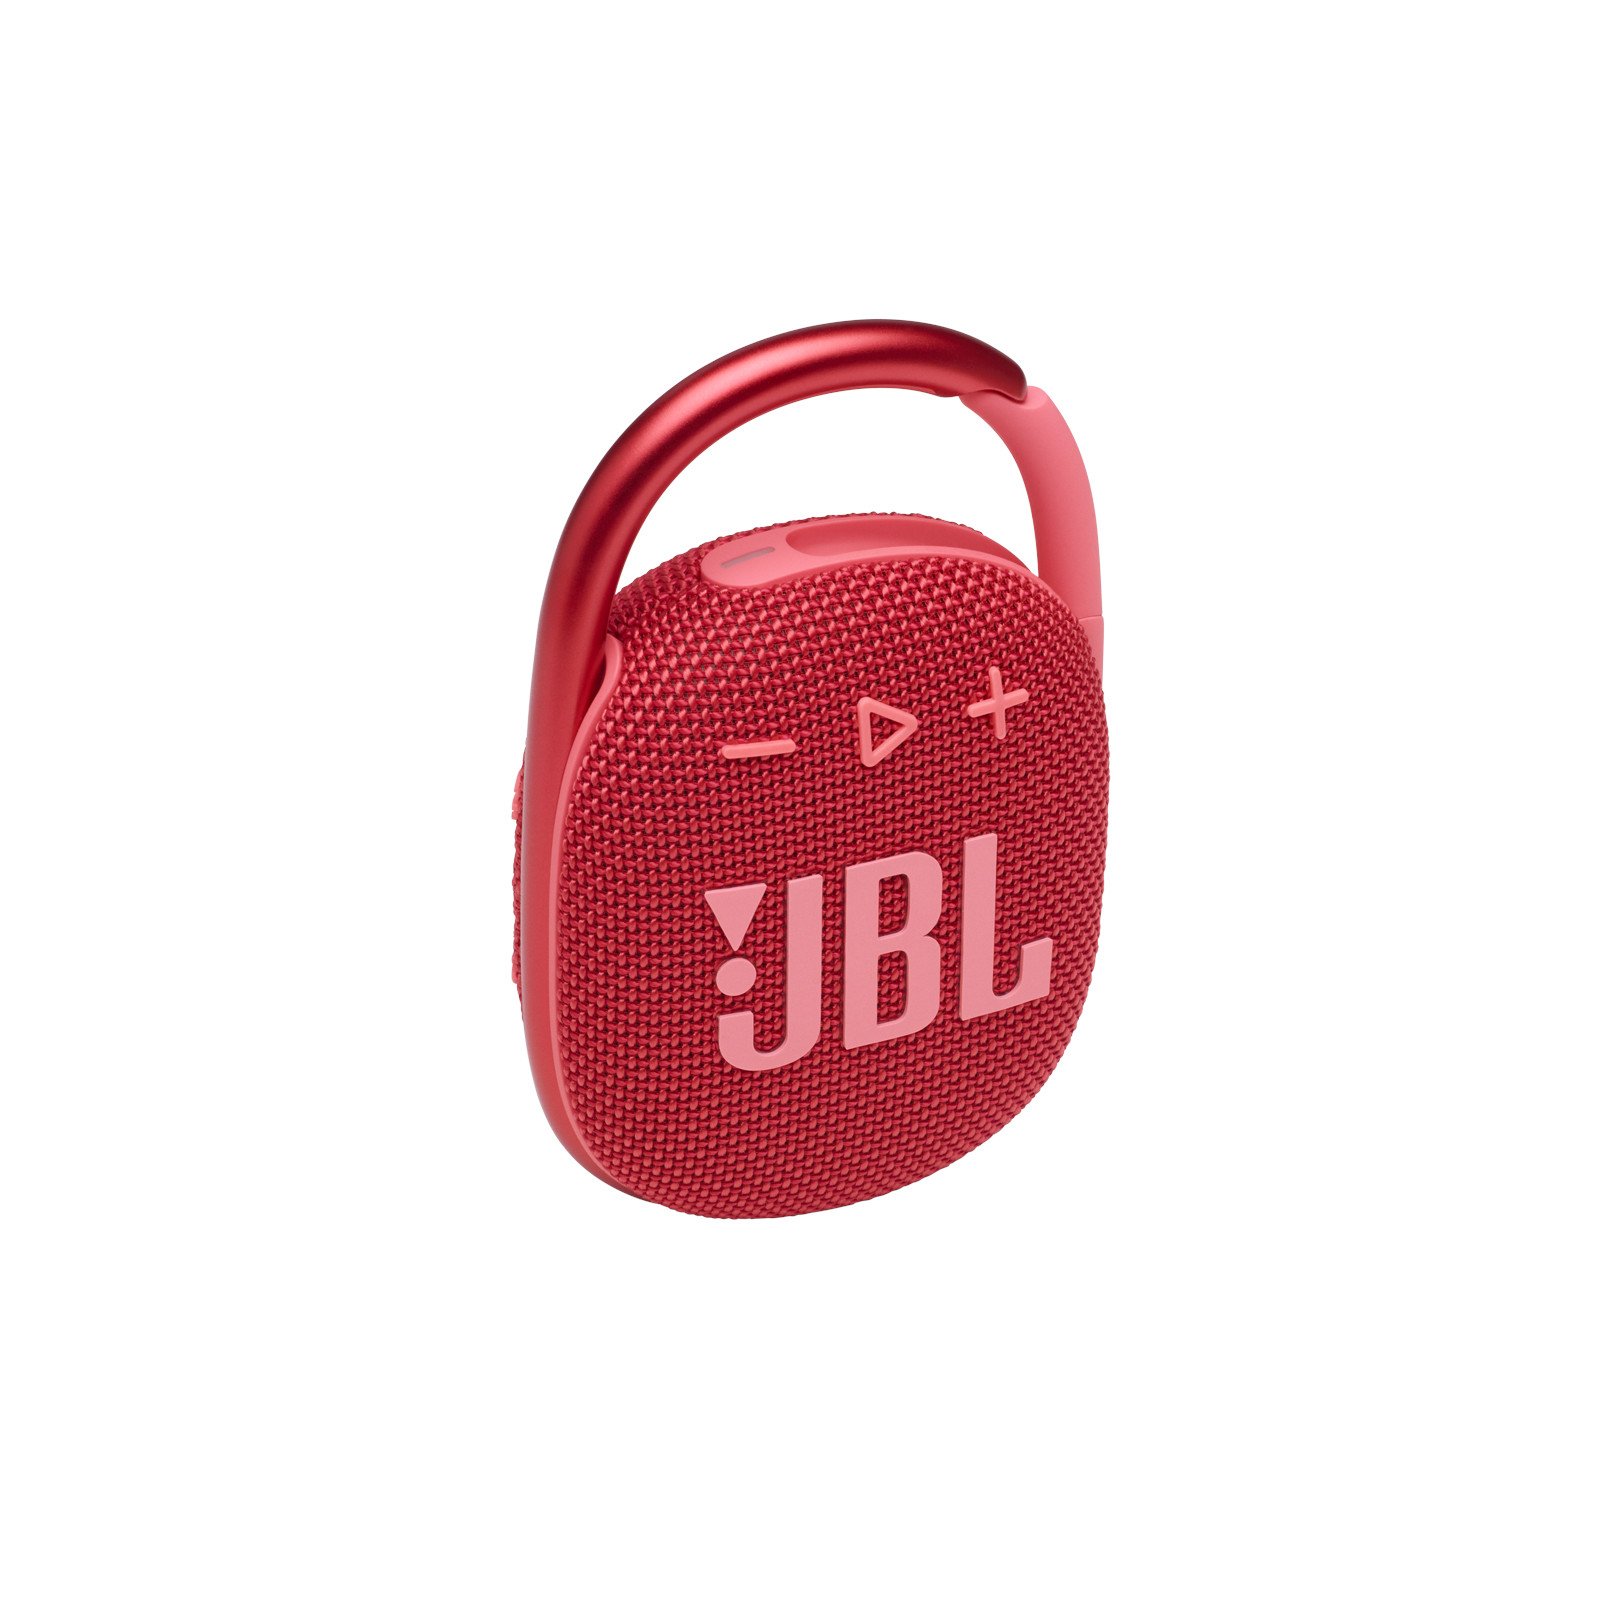 JBL bluetooth speaker clip 4 red